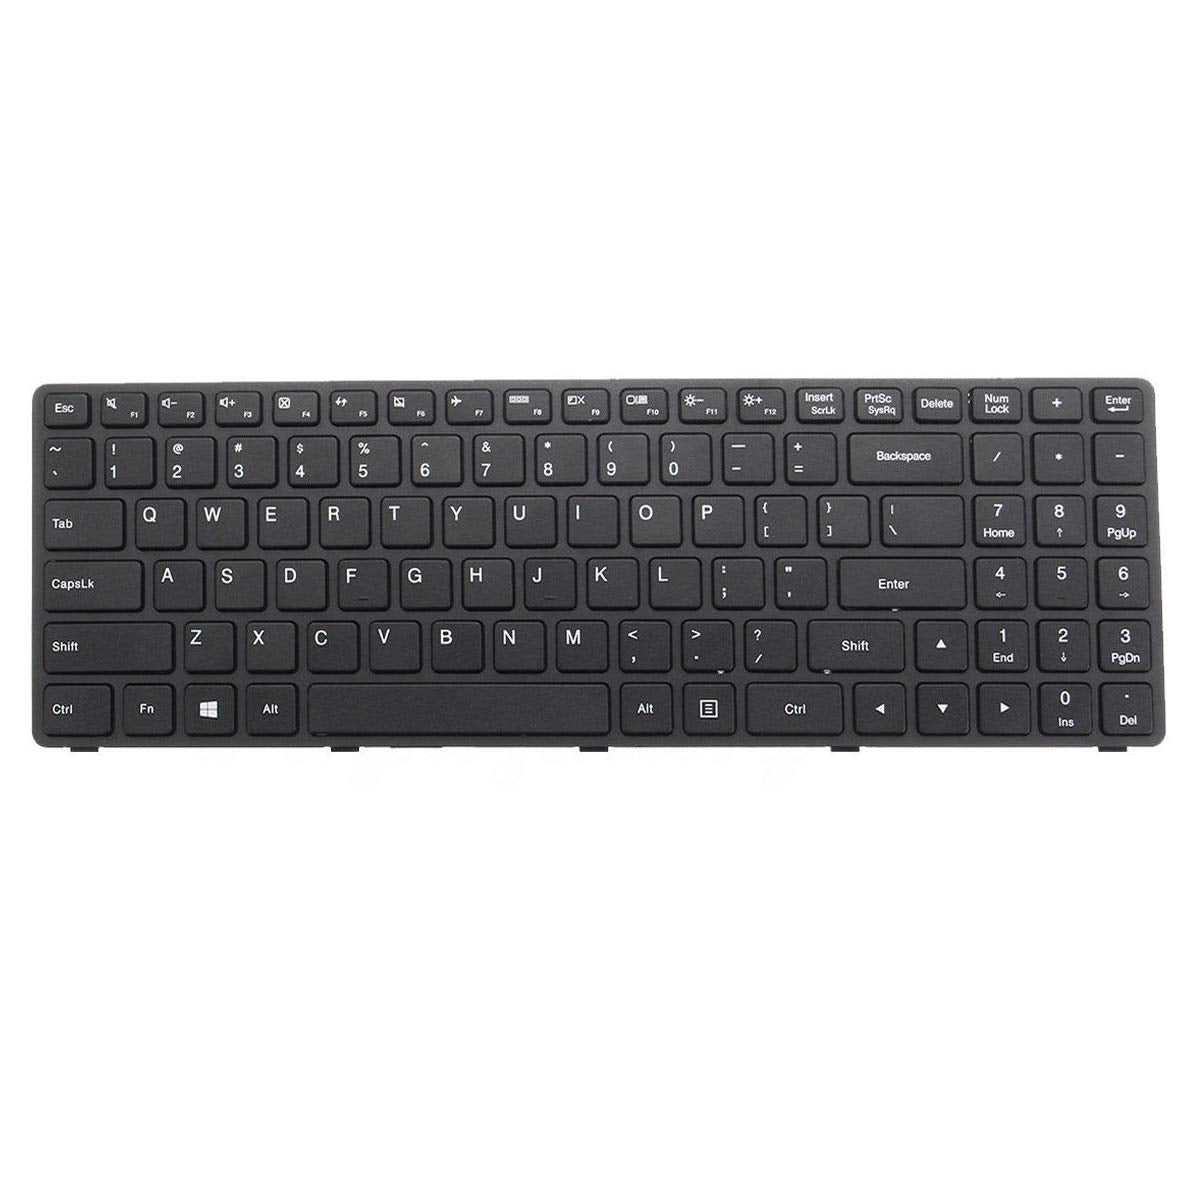 Keyboard for Lenovo IDEAPAD 100 15 15IBD Laptop